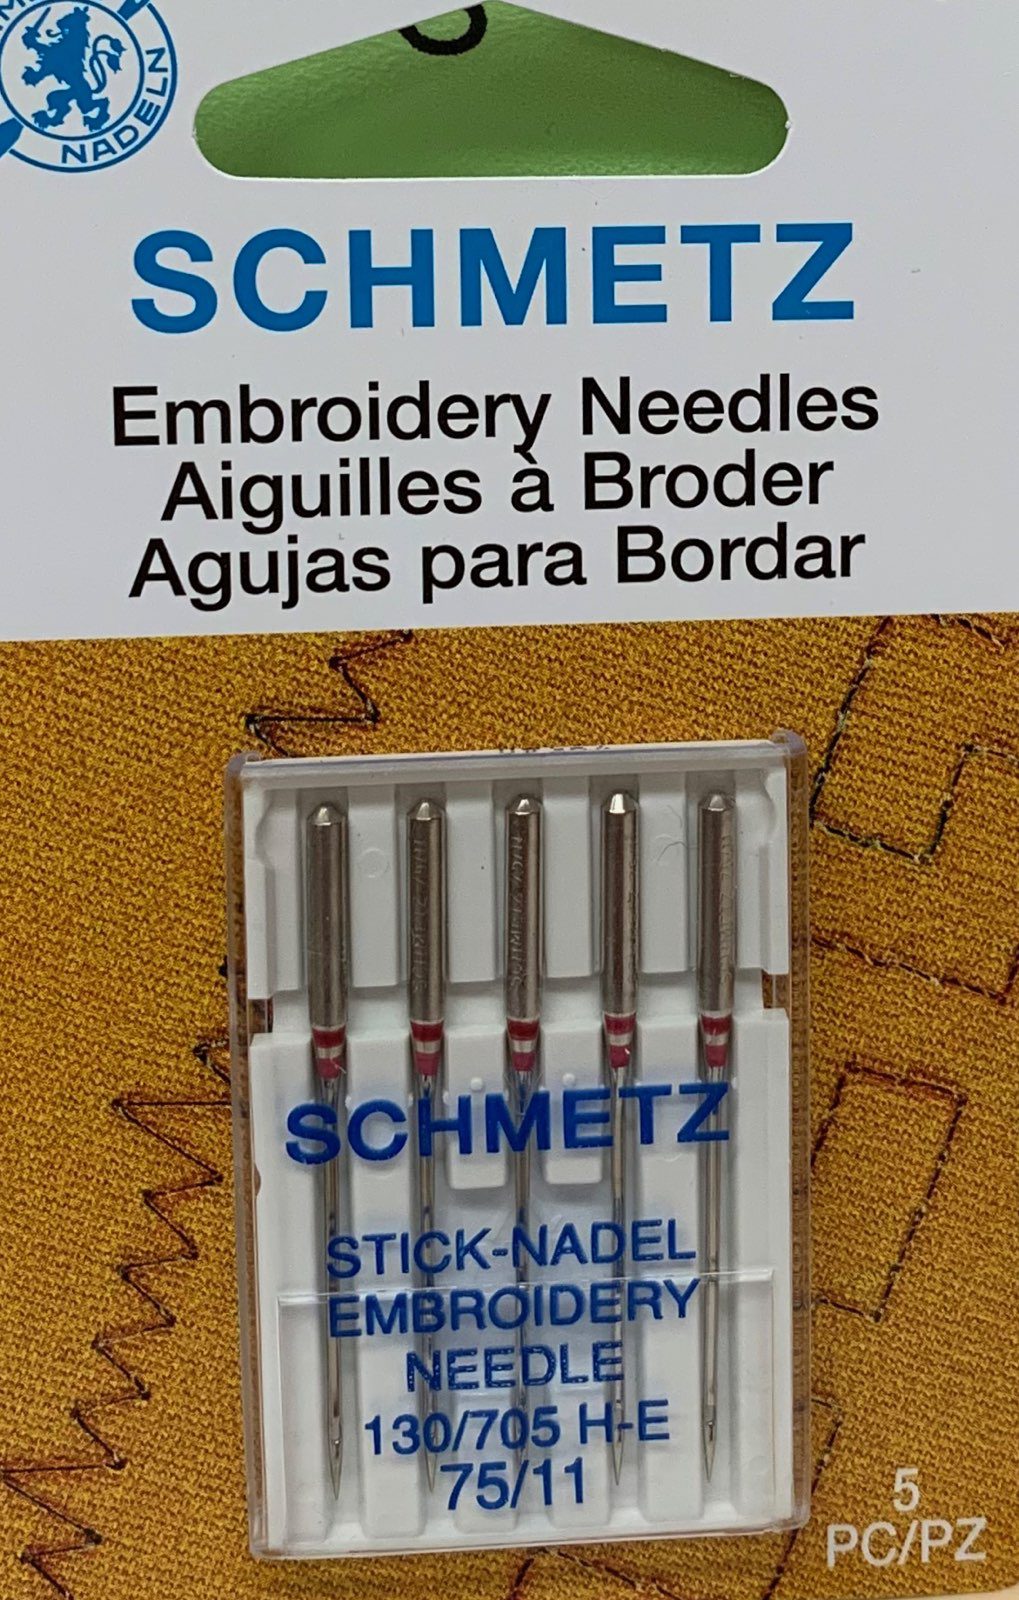 Schmetz - Embroidery Needles - 75/11